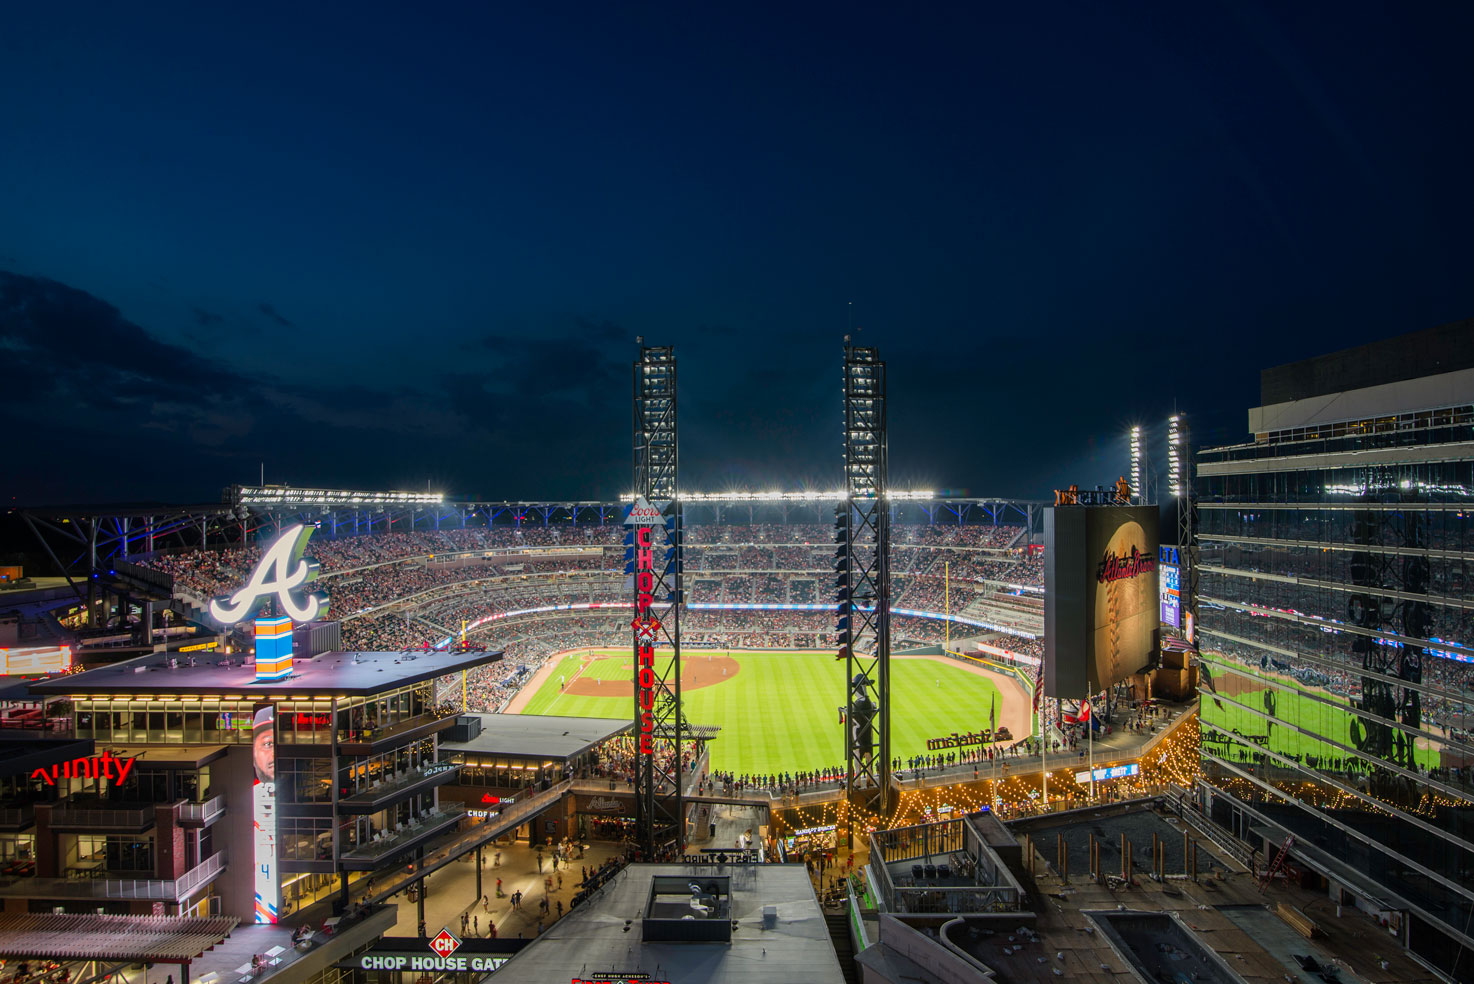 Atlanta Braves Truist Park and The Battery Atlanta night view